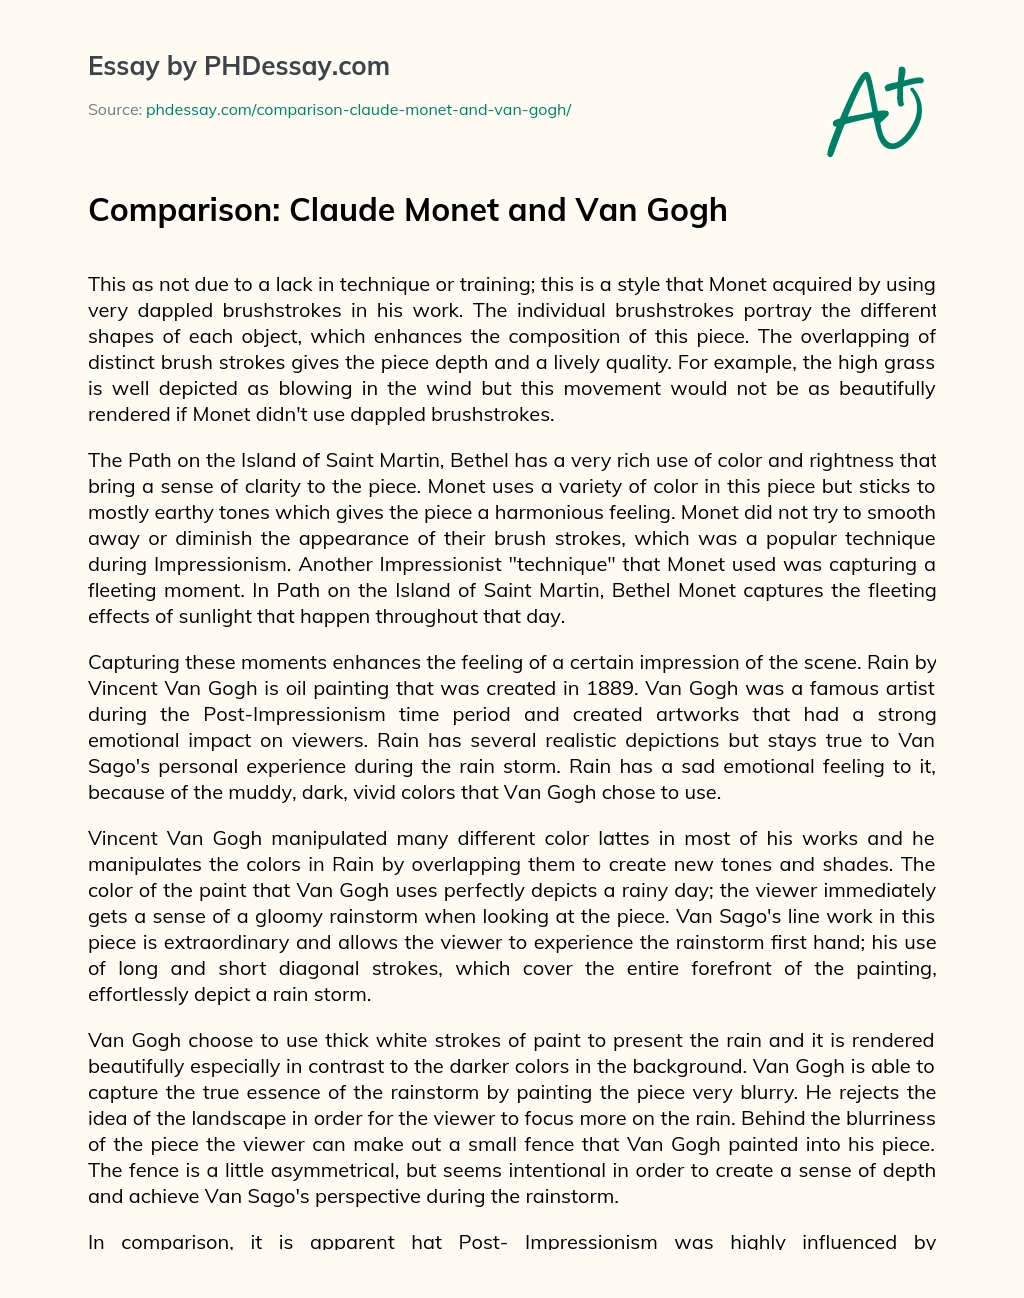 Comparison: Claude Monet and Van Gogh essay